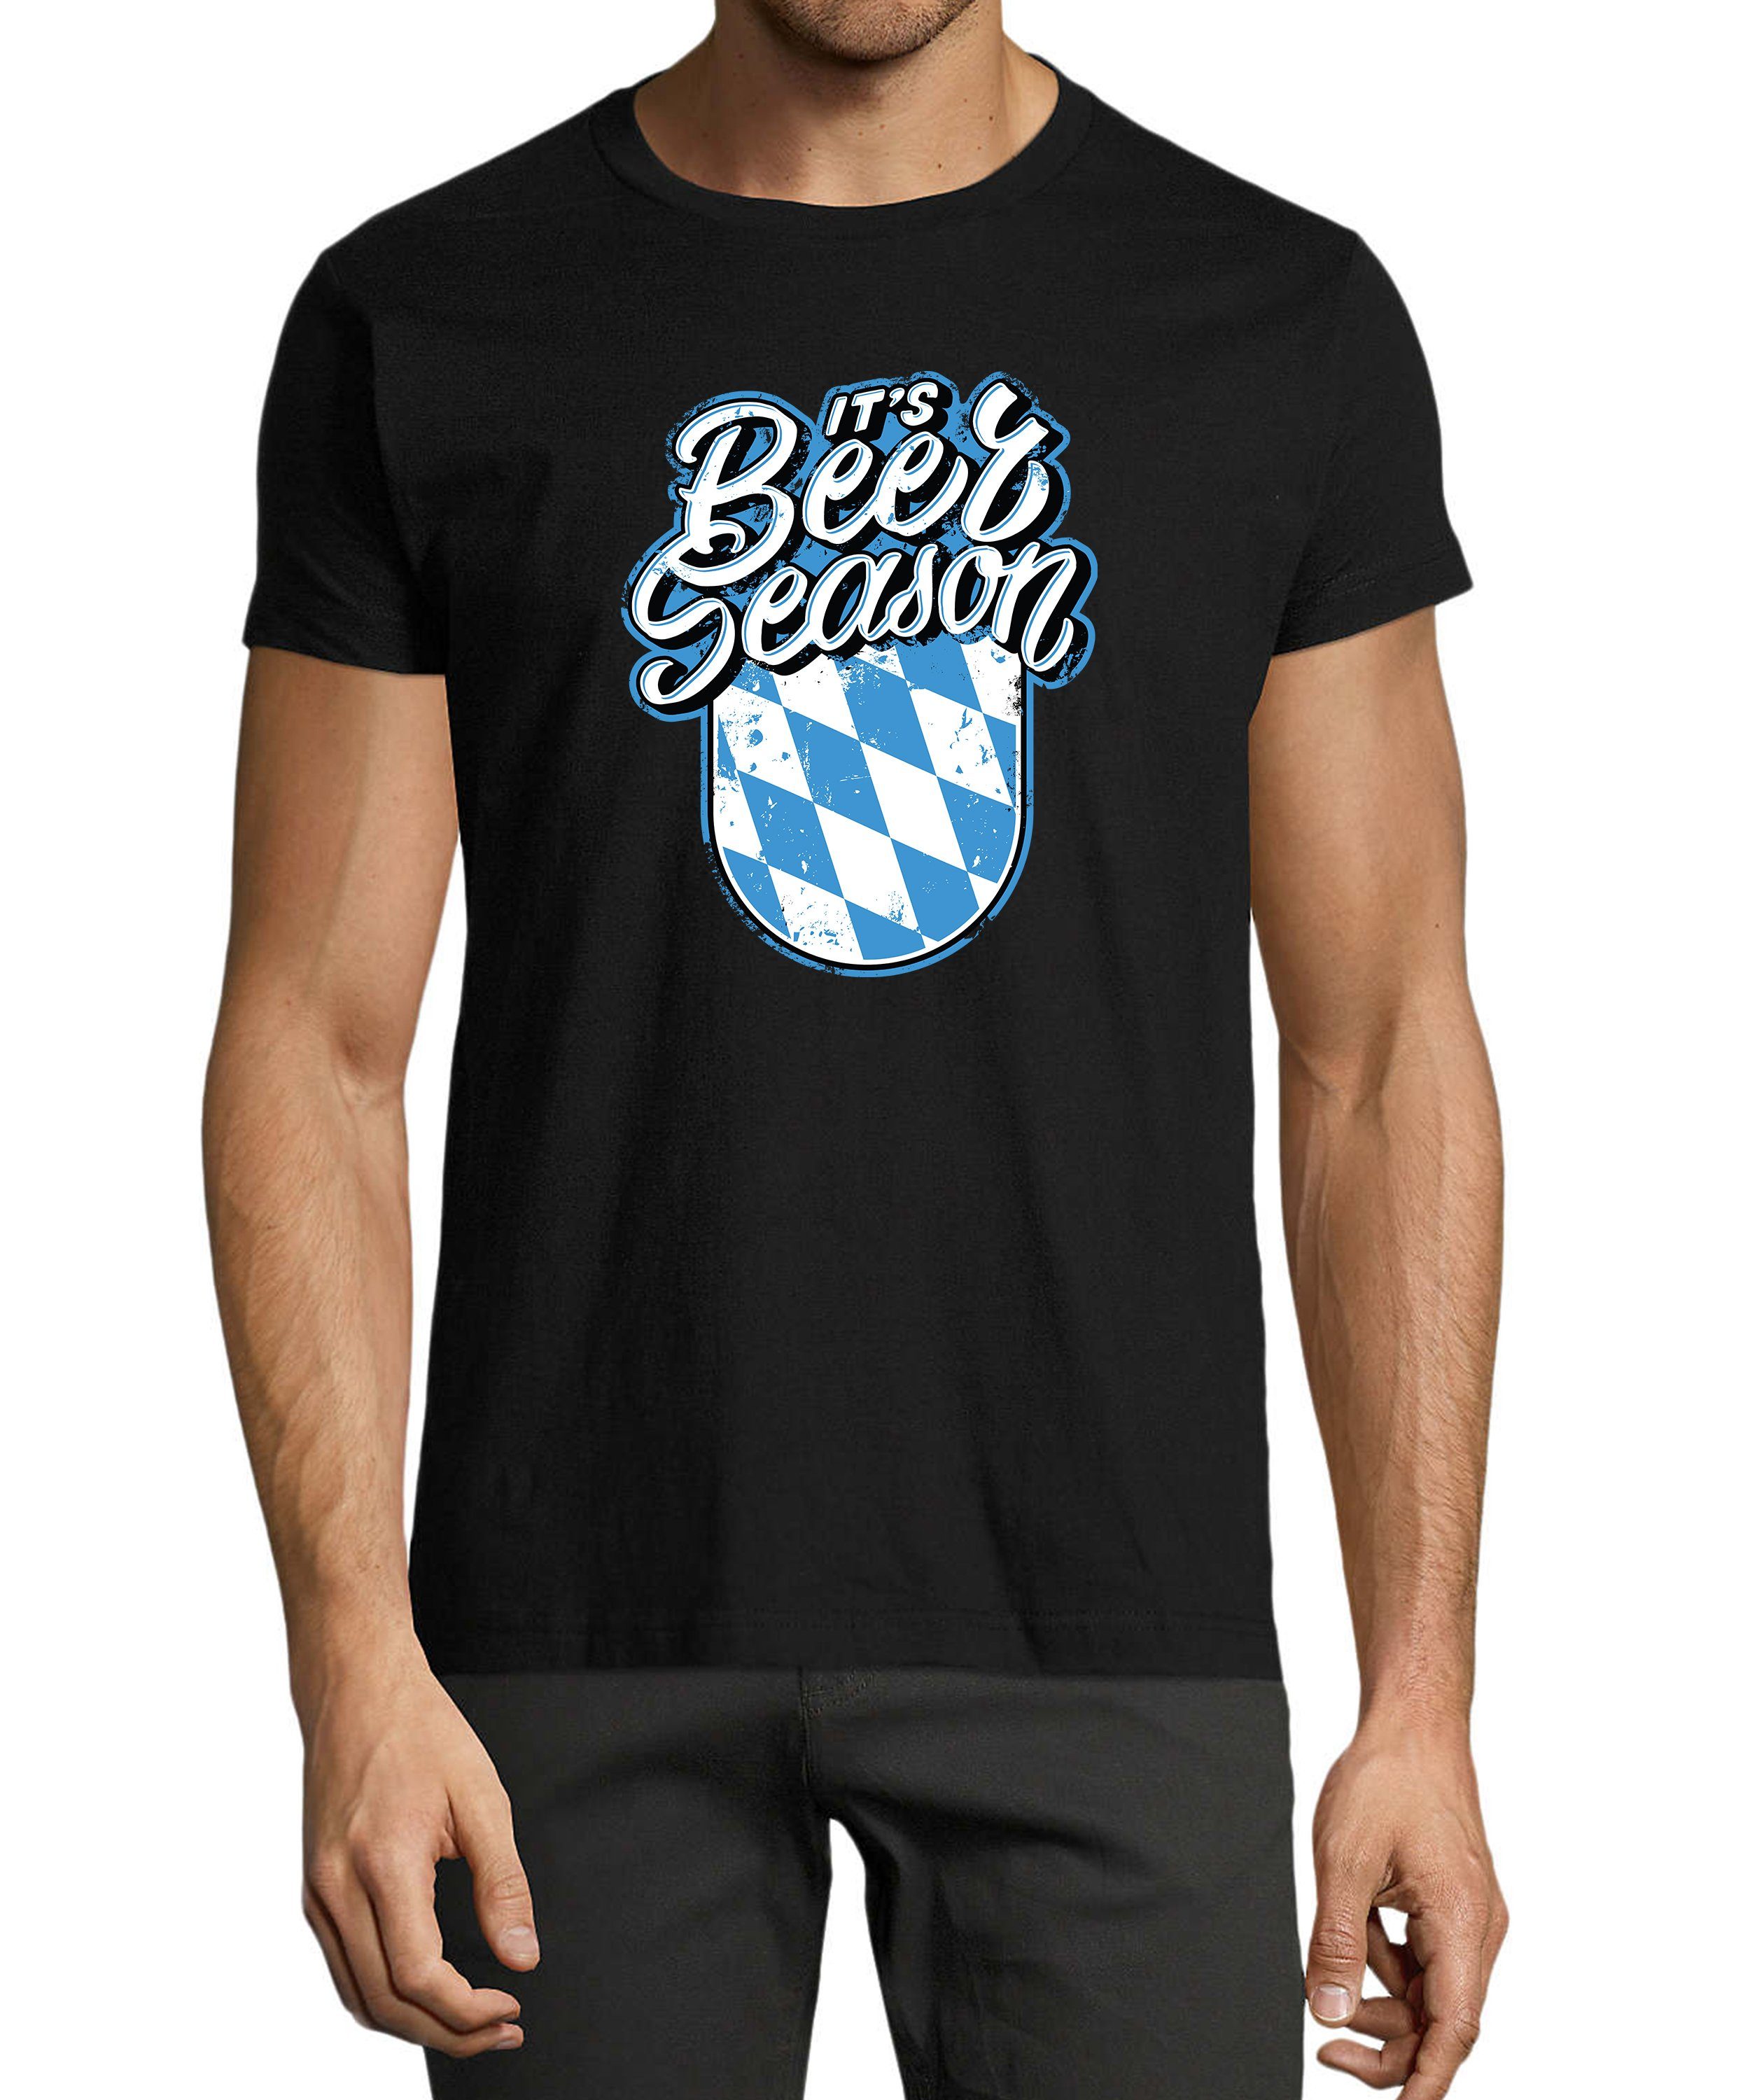 MyDesign24 T-Shirt Herren Fun Print Shirt - Oktoberfest Trinkshirt its Beer Season Baumwollshirt mit Aufdruck Regular Fit, i303 schwarz